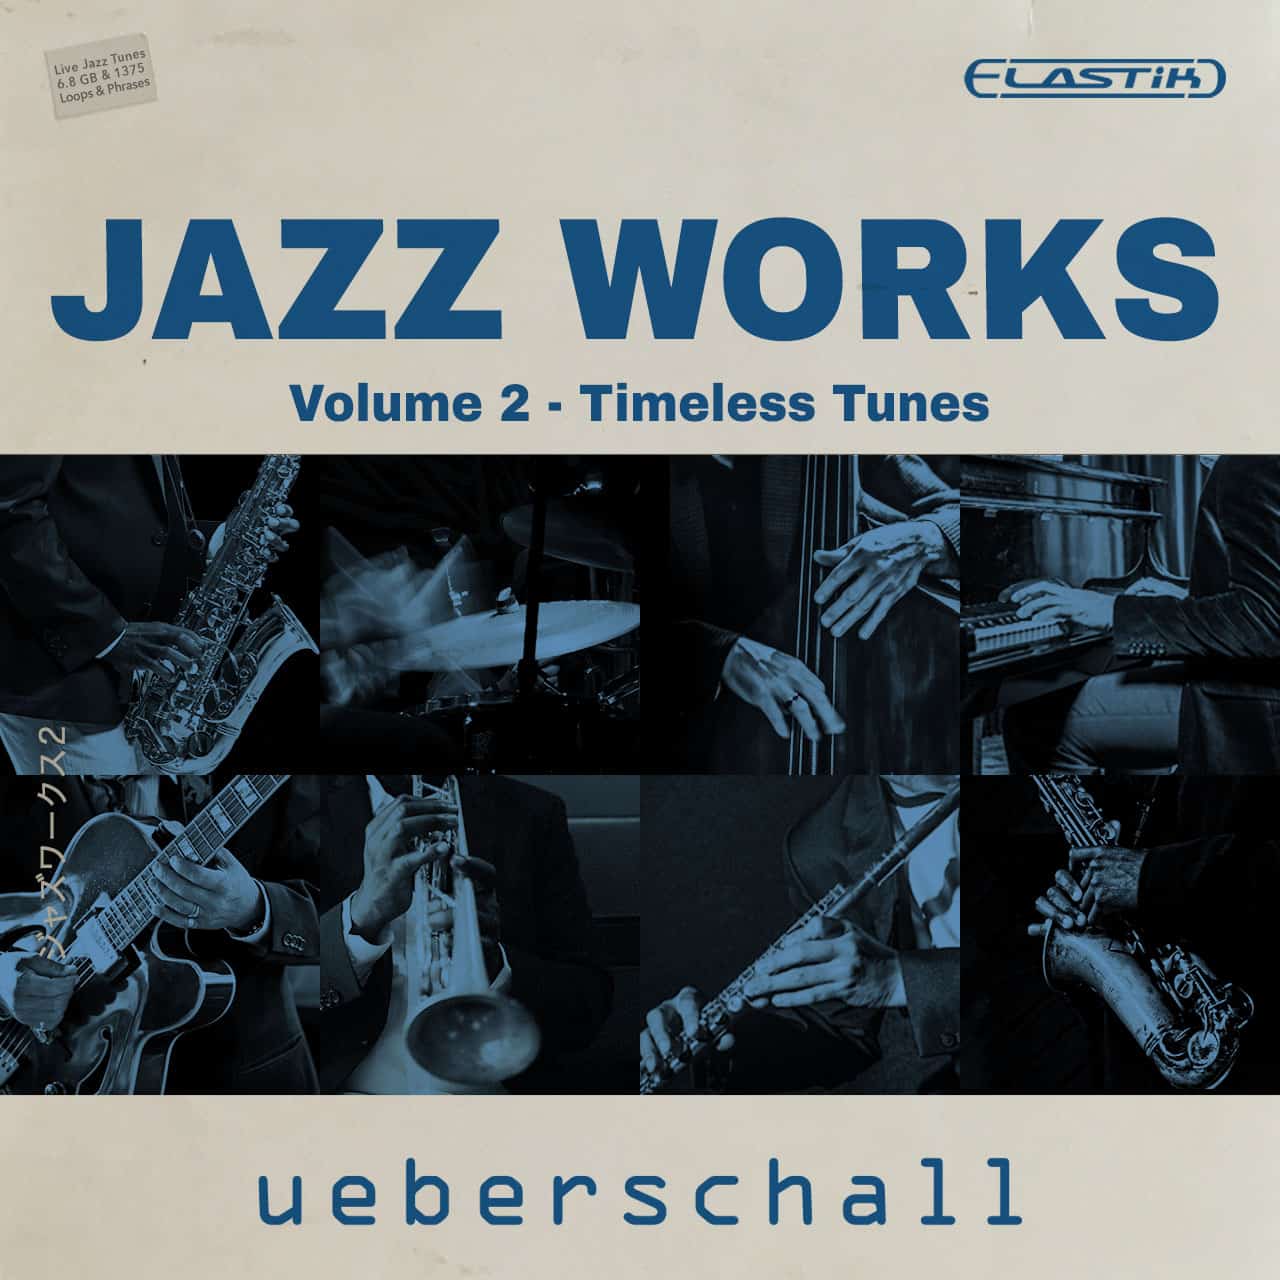 Jazz Works Vol. 2 – TimelessTunes For Music, Film, TV, Ad, Game or Online